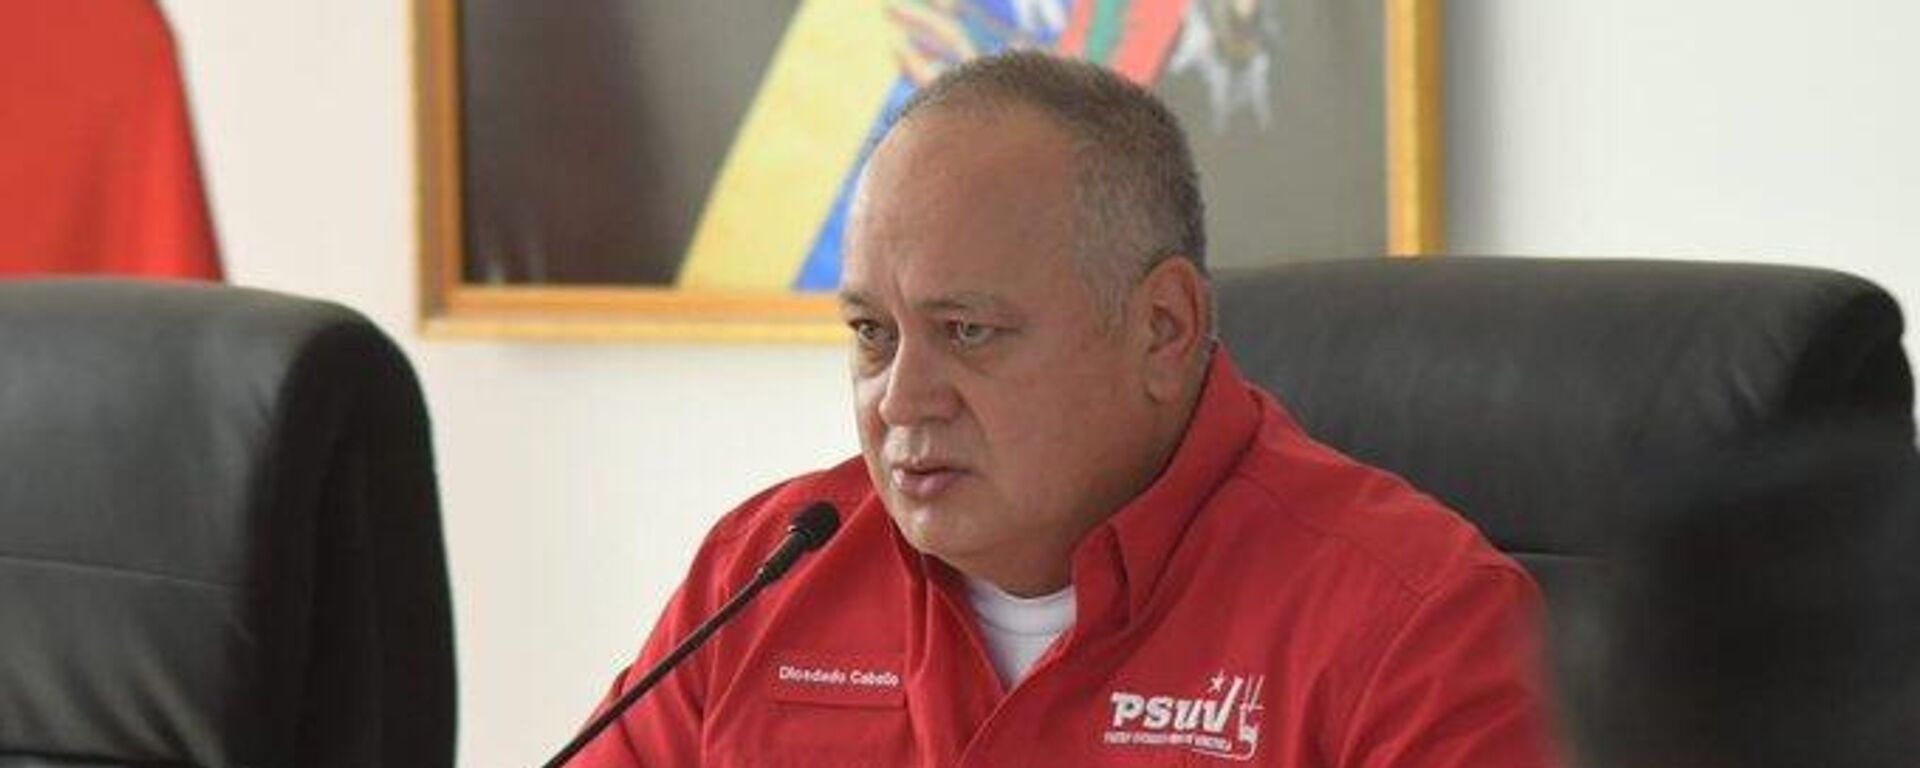 Diosdado Cabello, vice-presidente do Partido Socialista Unido da Venezuela (PSUV) - Sputnik Brasil, 1920, 25.07.2022